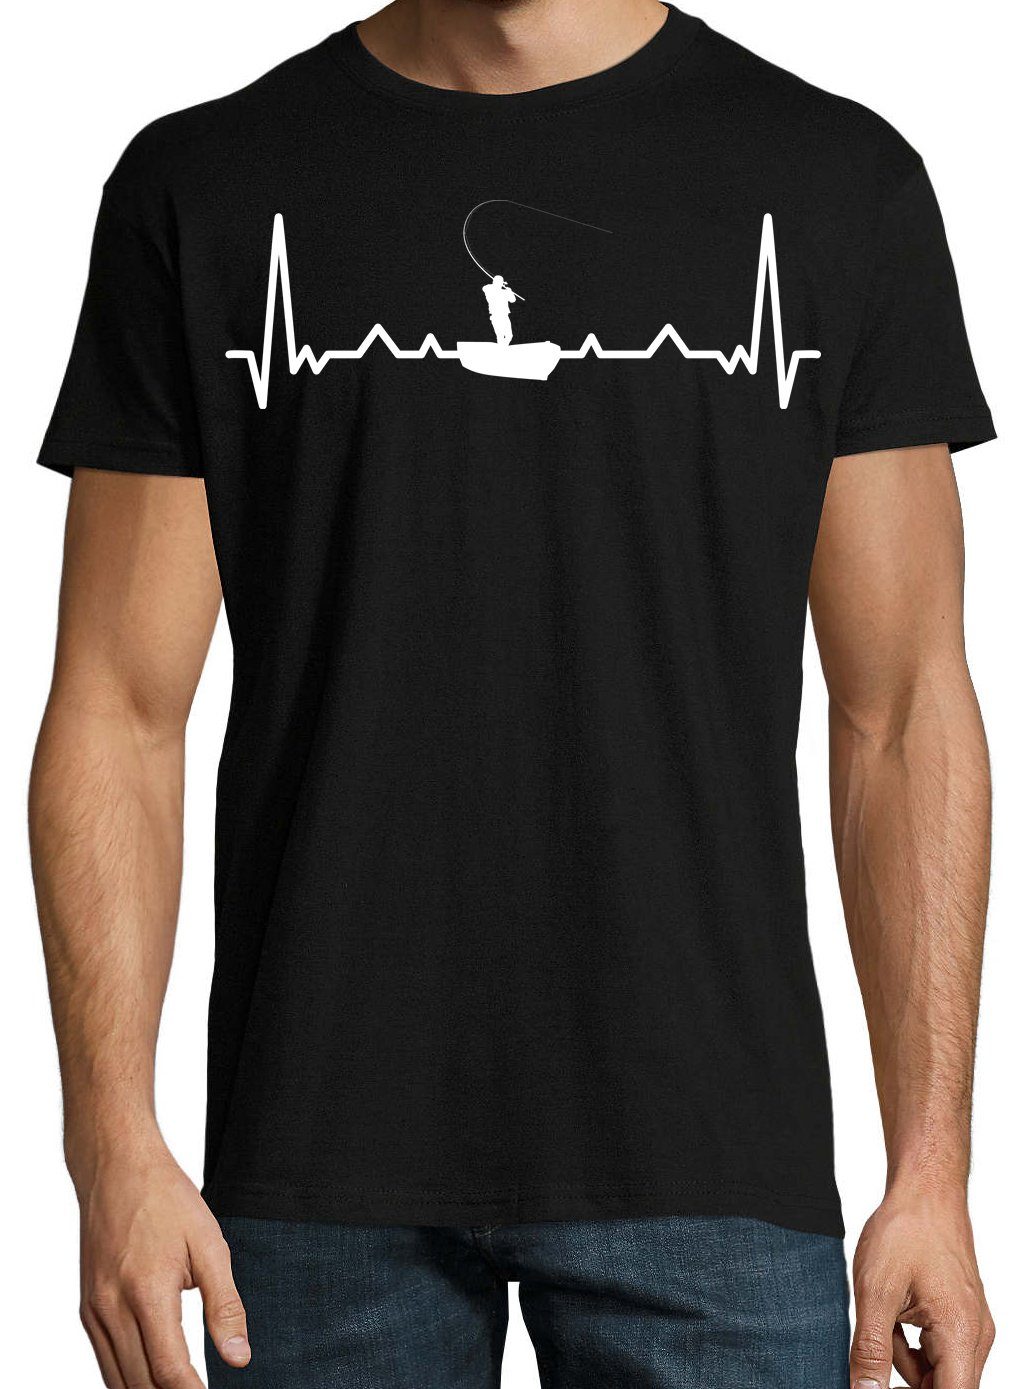 Angeln Shirt Schwarz Designz Heartbeat T-Shirt Herren lustigem Frontprint Angler mit Youth